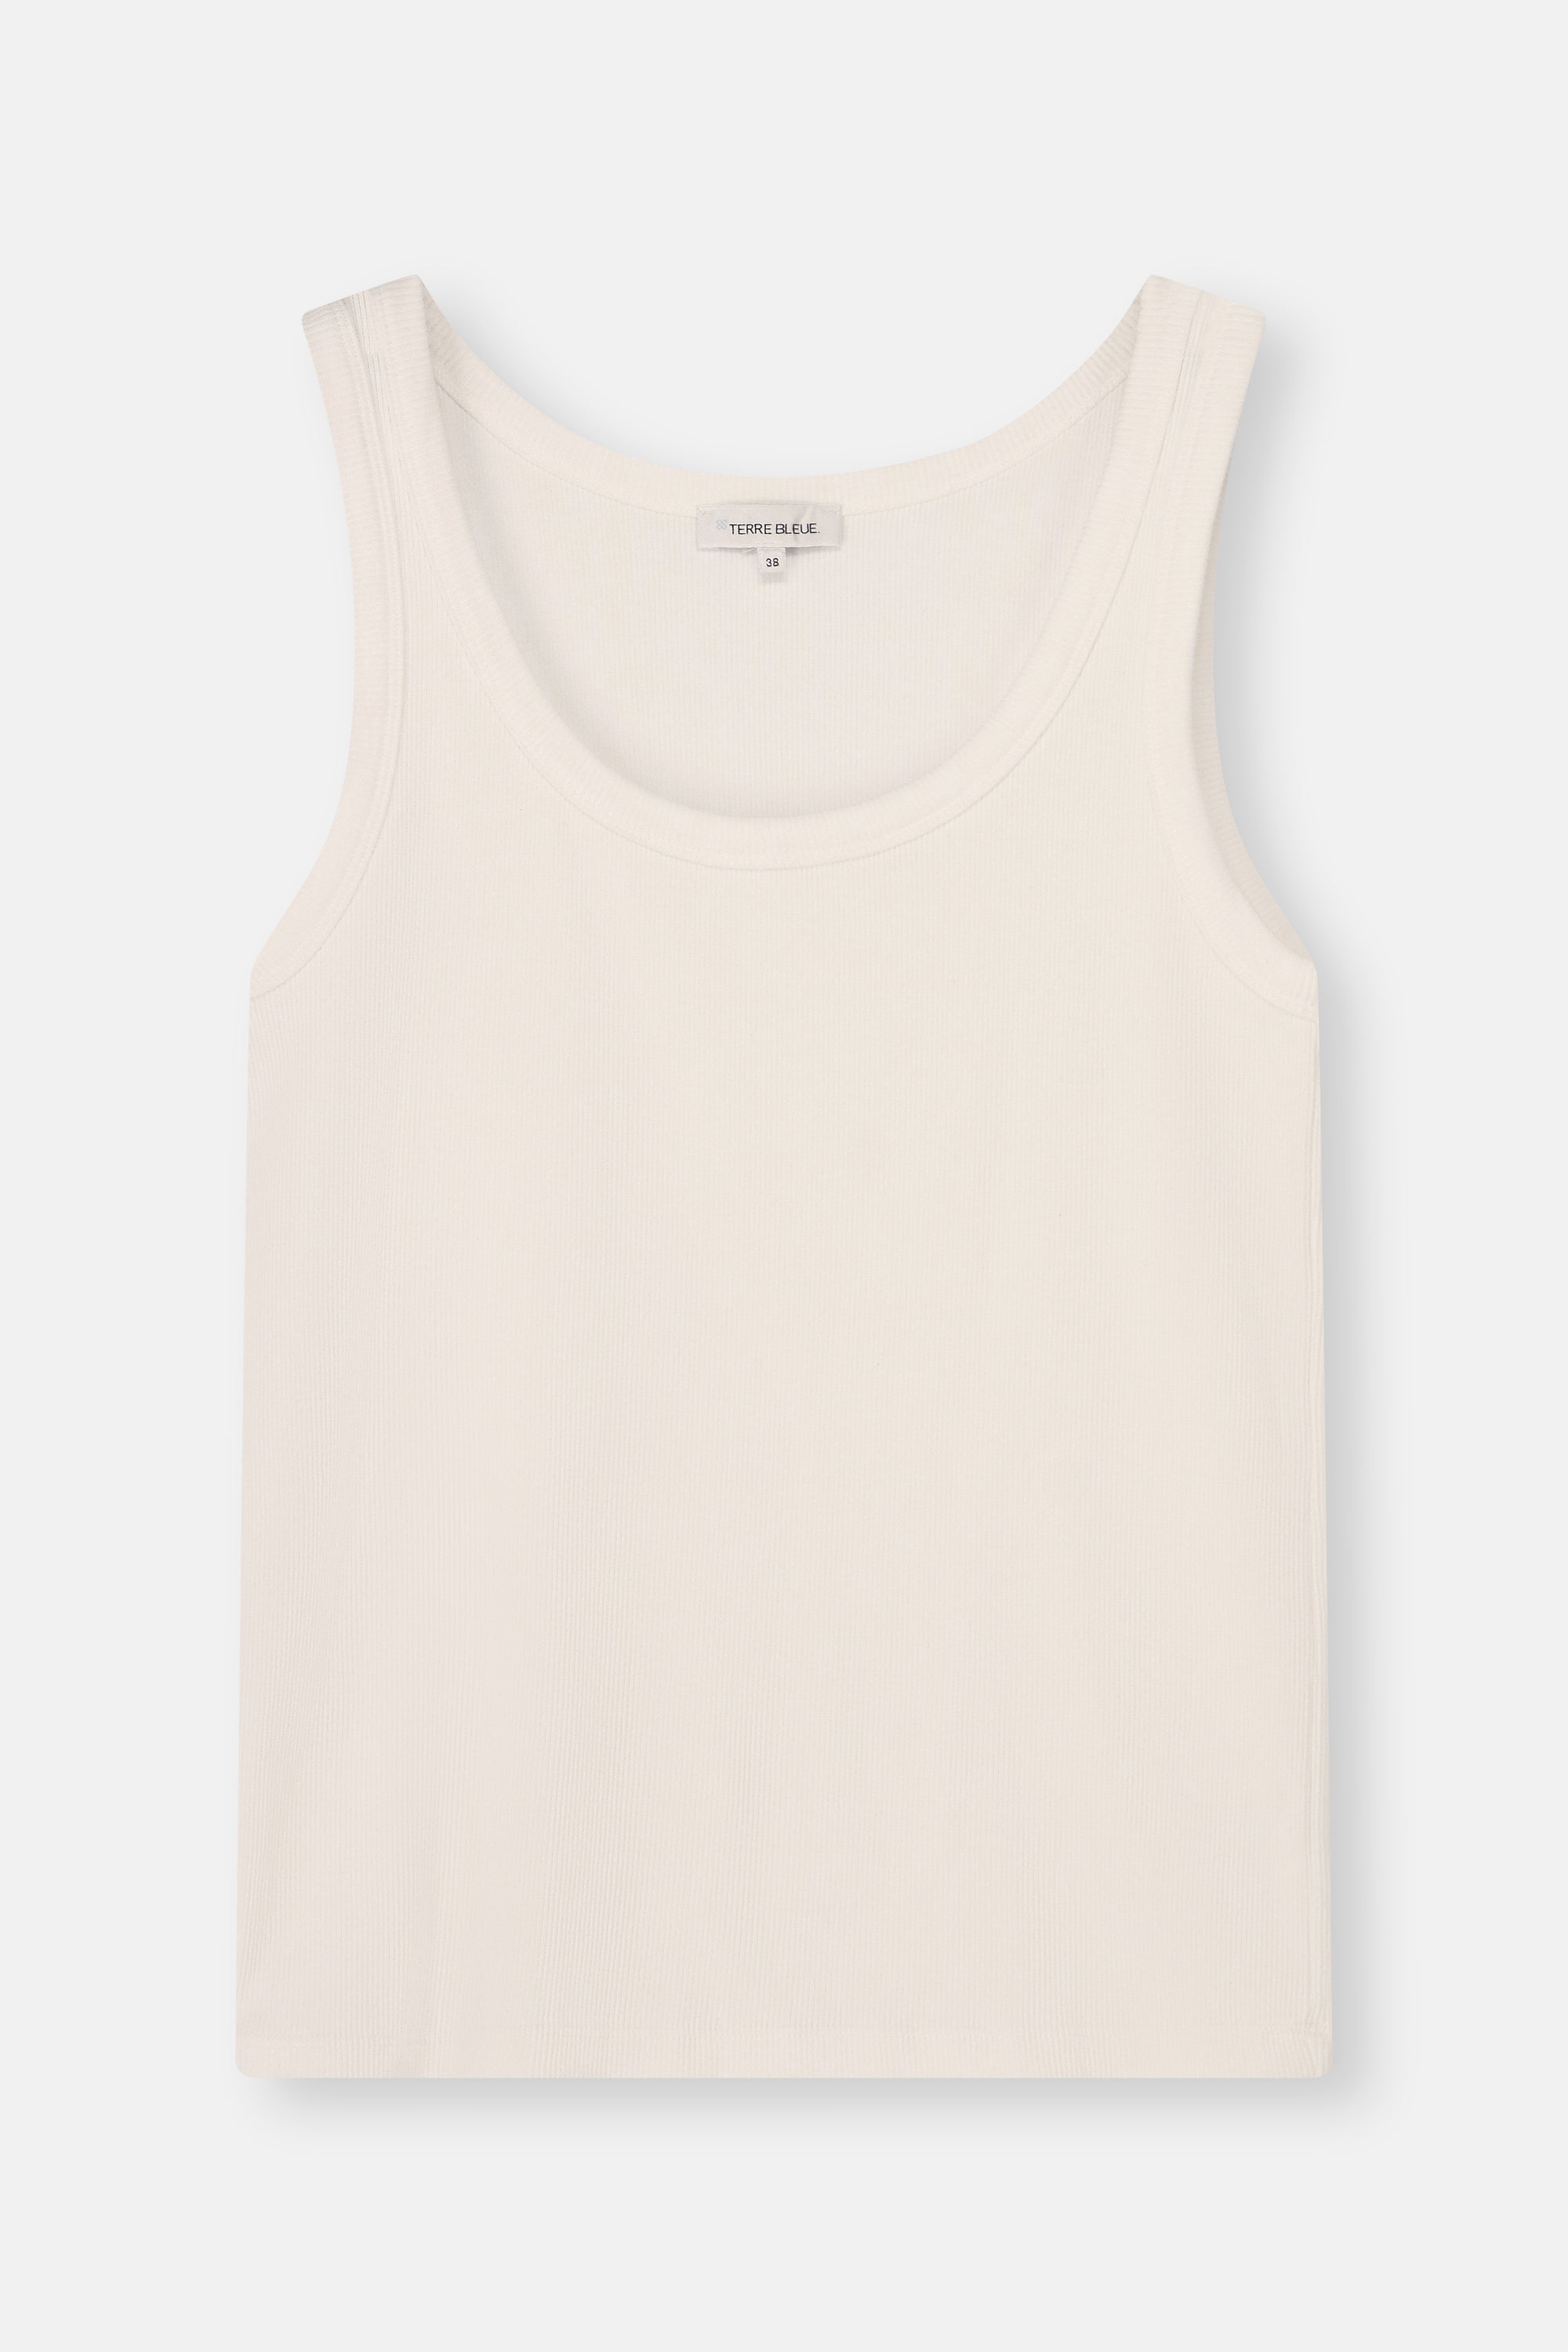 T-Shirt Blanc Terre Bleue (Catelijn/000)